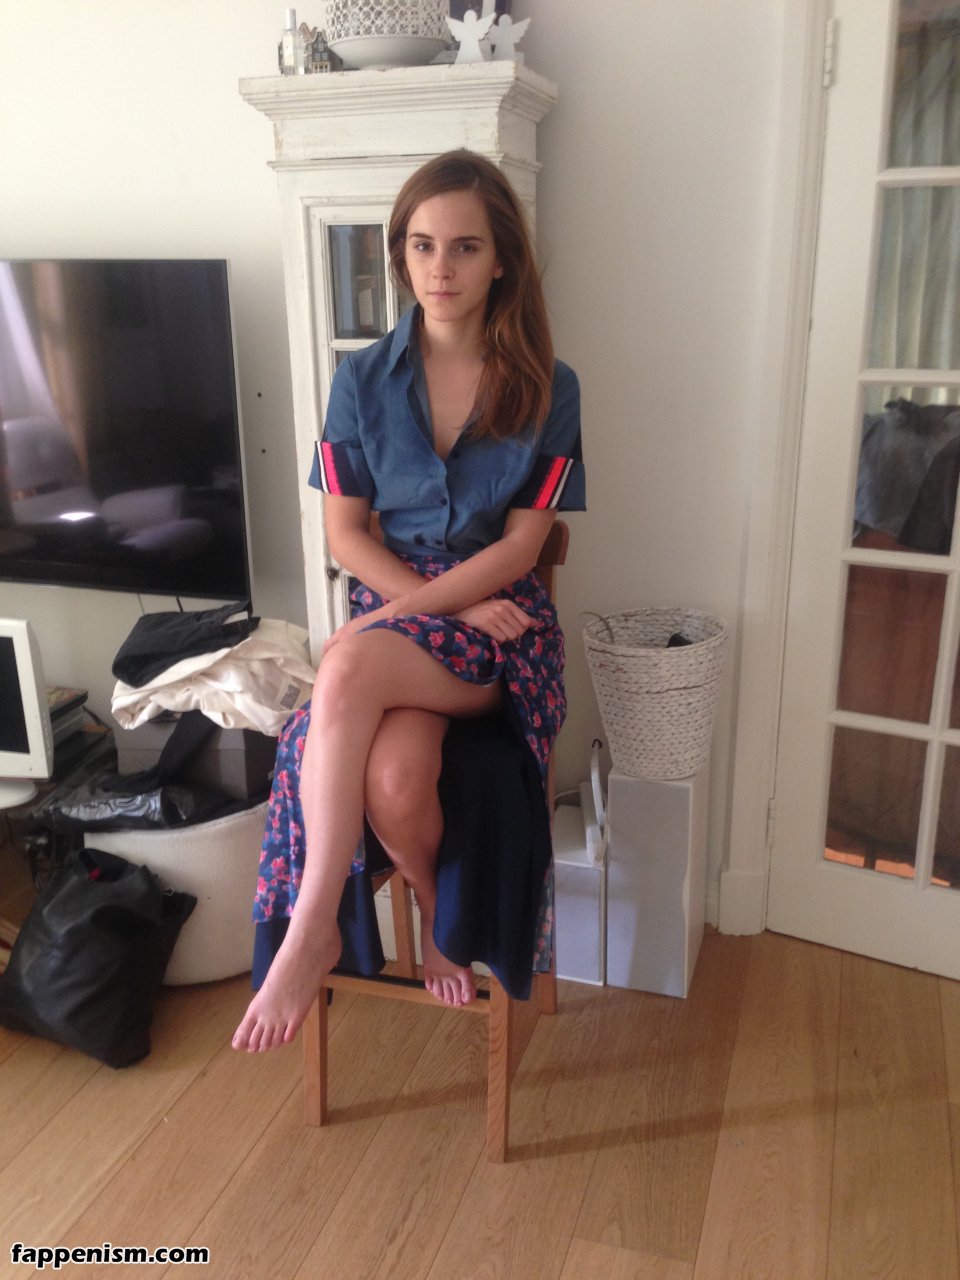 Fappening nude emma watson the Emma Watson